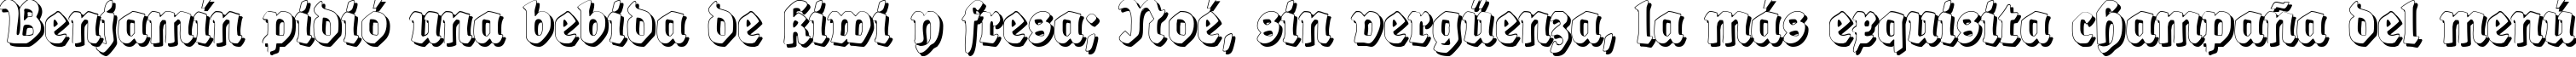 Пример написания шрифтом Ballade Shadow текста на испанском